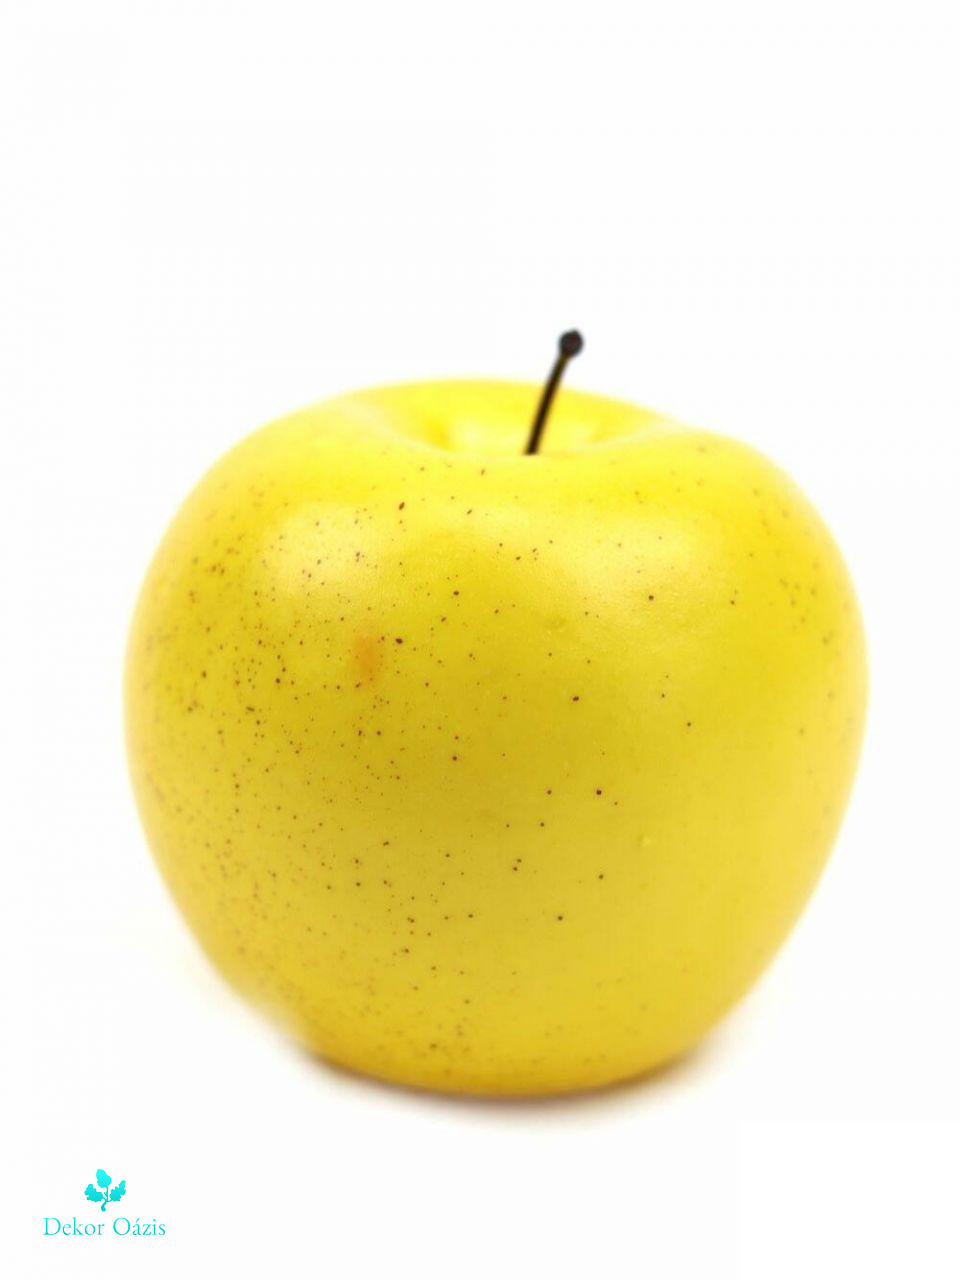 Mű alma darabos - 2 színben